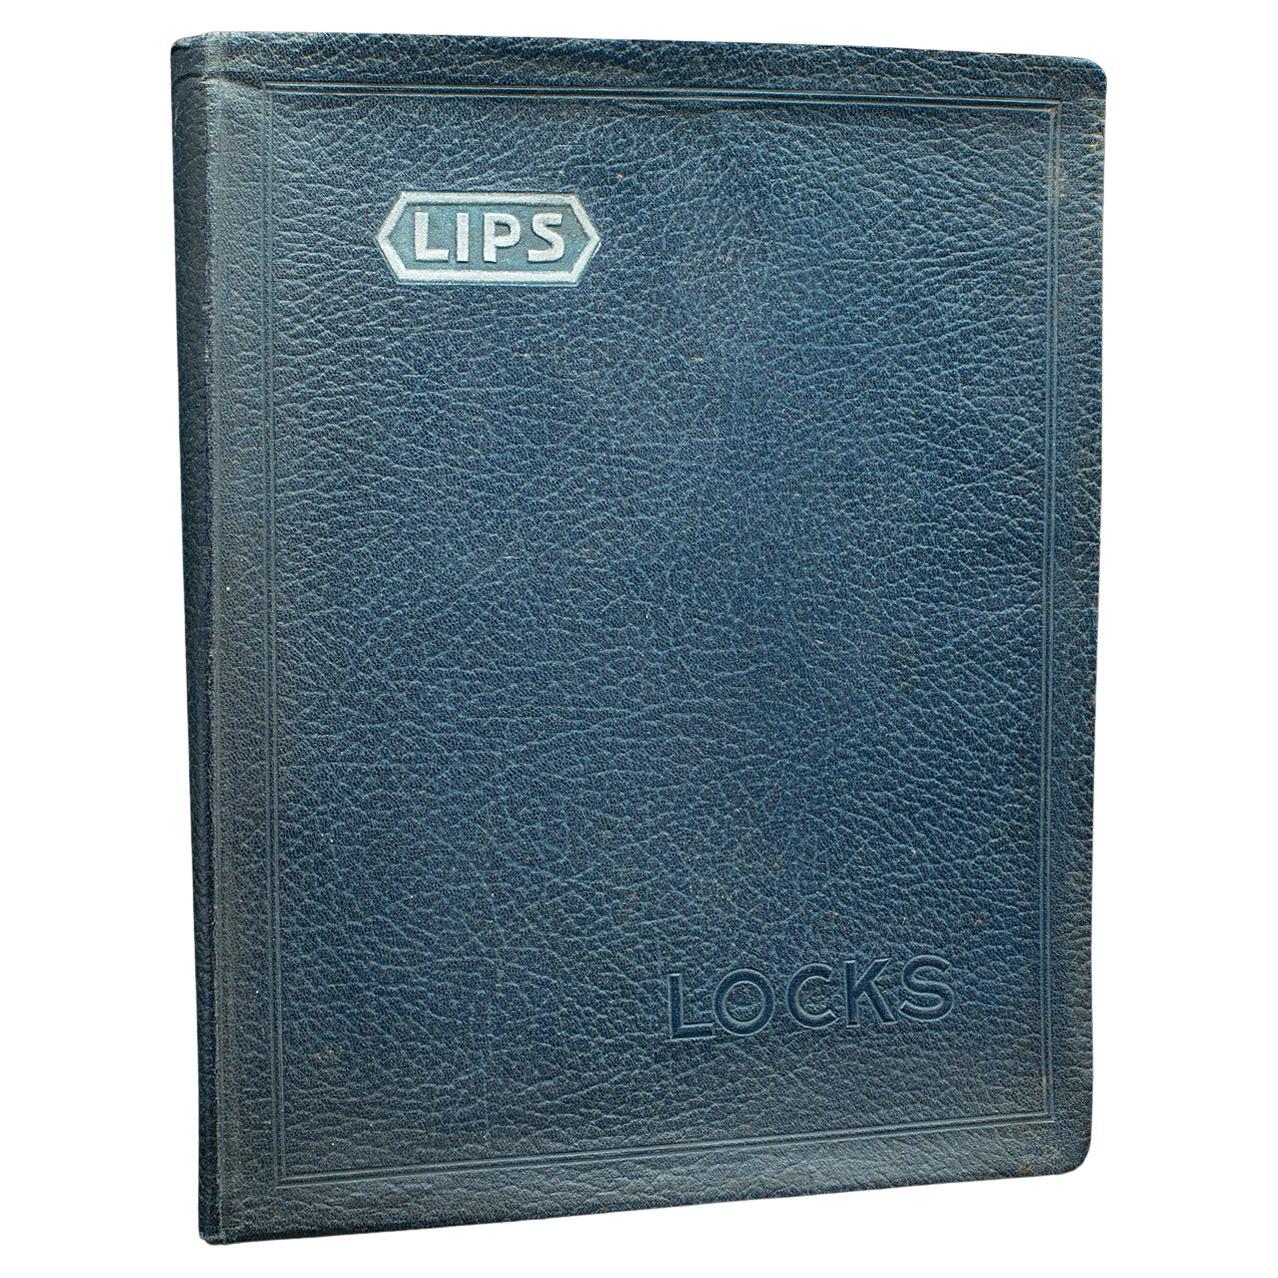 Catalogue professionnel Lips Locks anglais, Folio, Nicholls and Clarke, C.1935 en vente